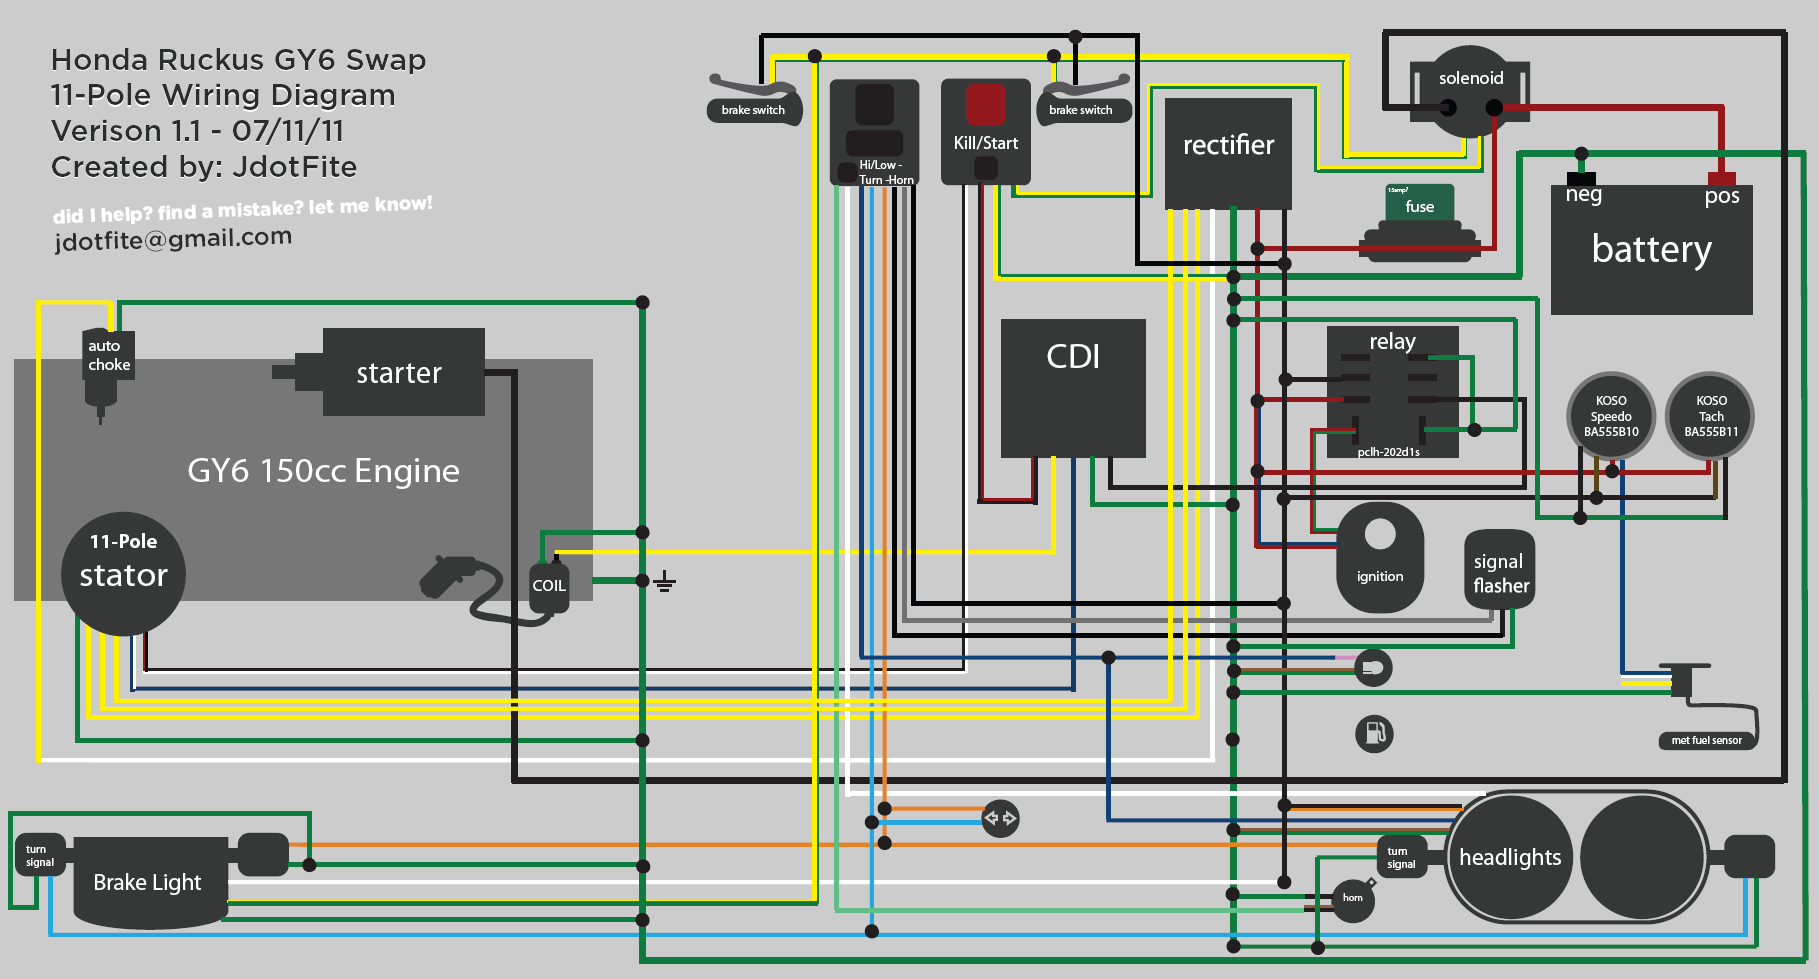 Ruckus Gy6 Swap Wiring Diagram | Honda Ruckus Documentation - Gy6 Wiring Diagram